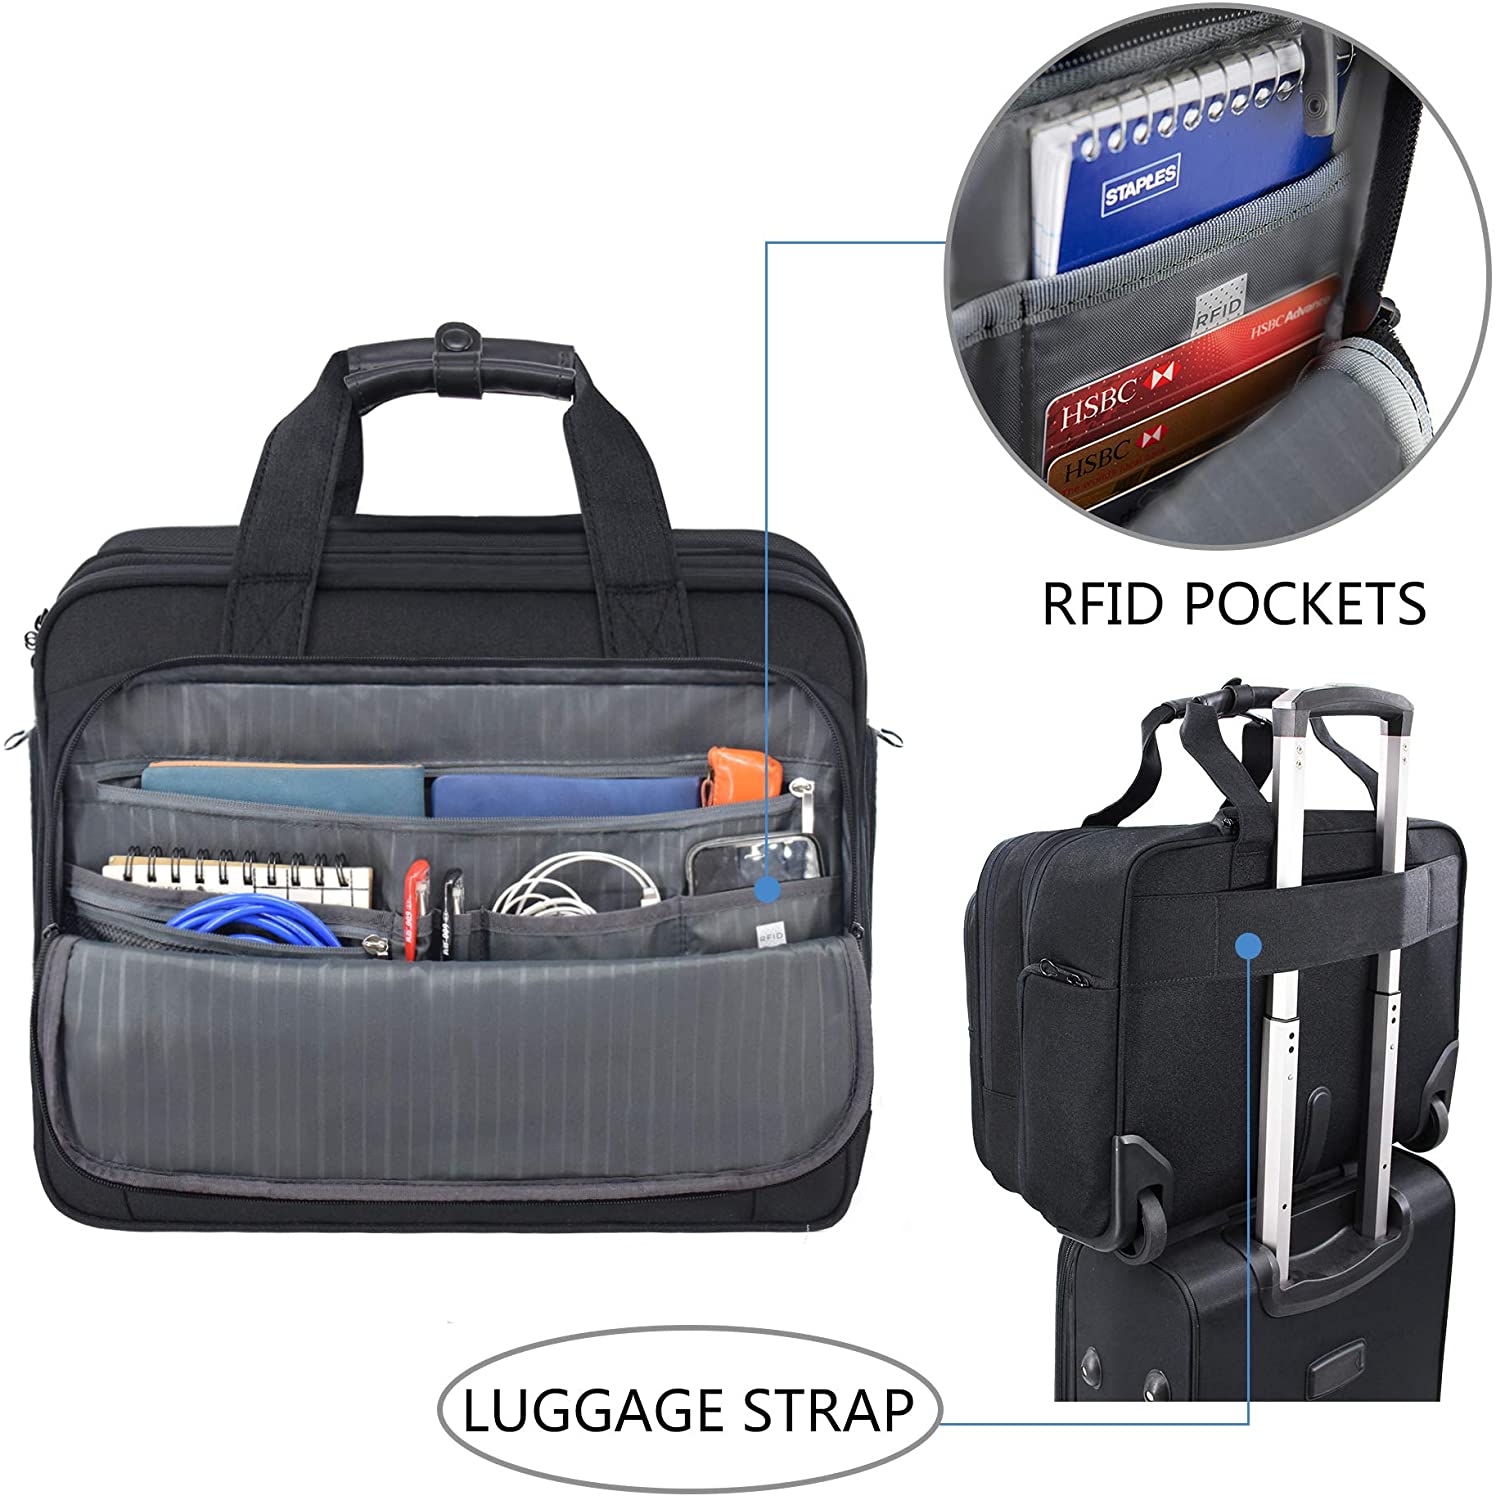 Kroser Rolling Laptop Bag Briefcase for 17.3 inch Laptop Overnight Roller Work Case-Black, Adult Unisex, Size: 18.1 x 14.2 x 8.7